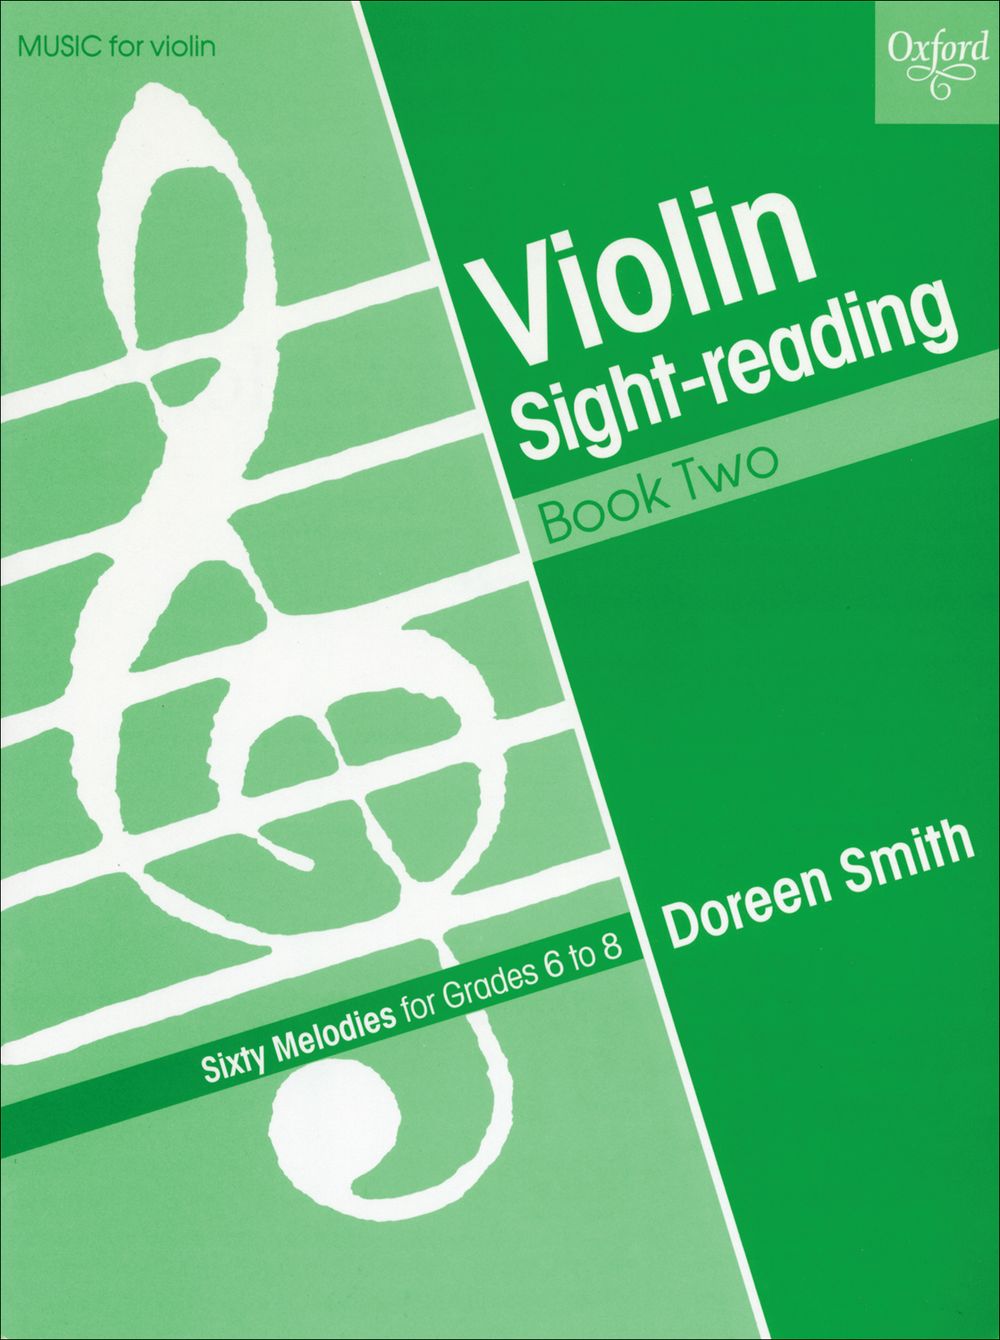 Violin Sight-reading Book 2 Grades 6-8 Smith Sheet Music Songbook